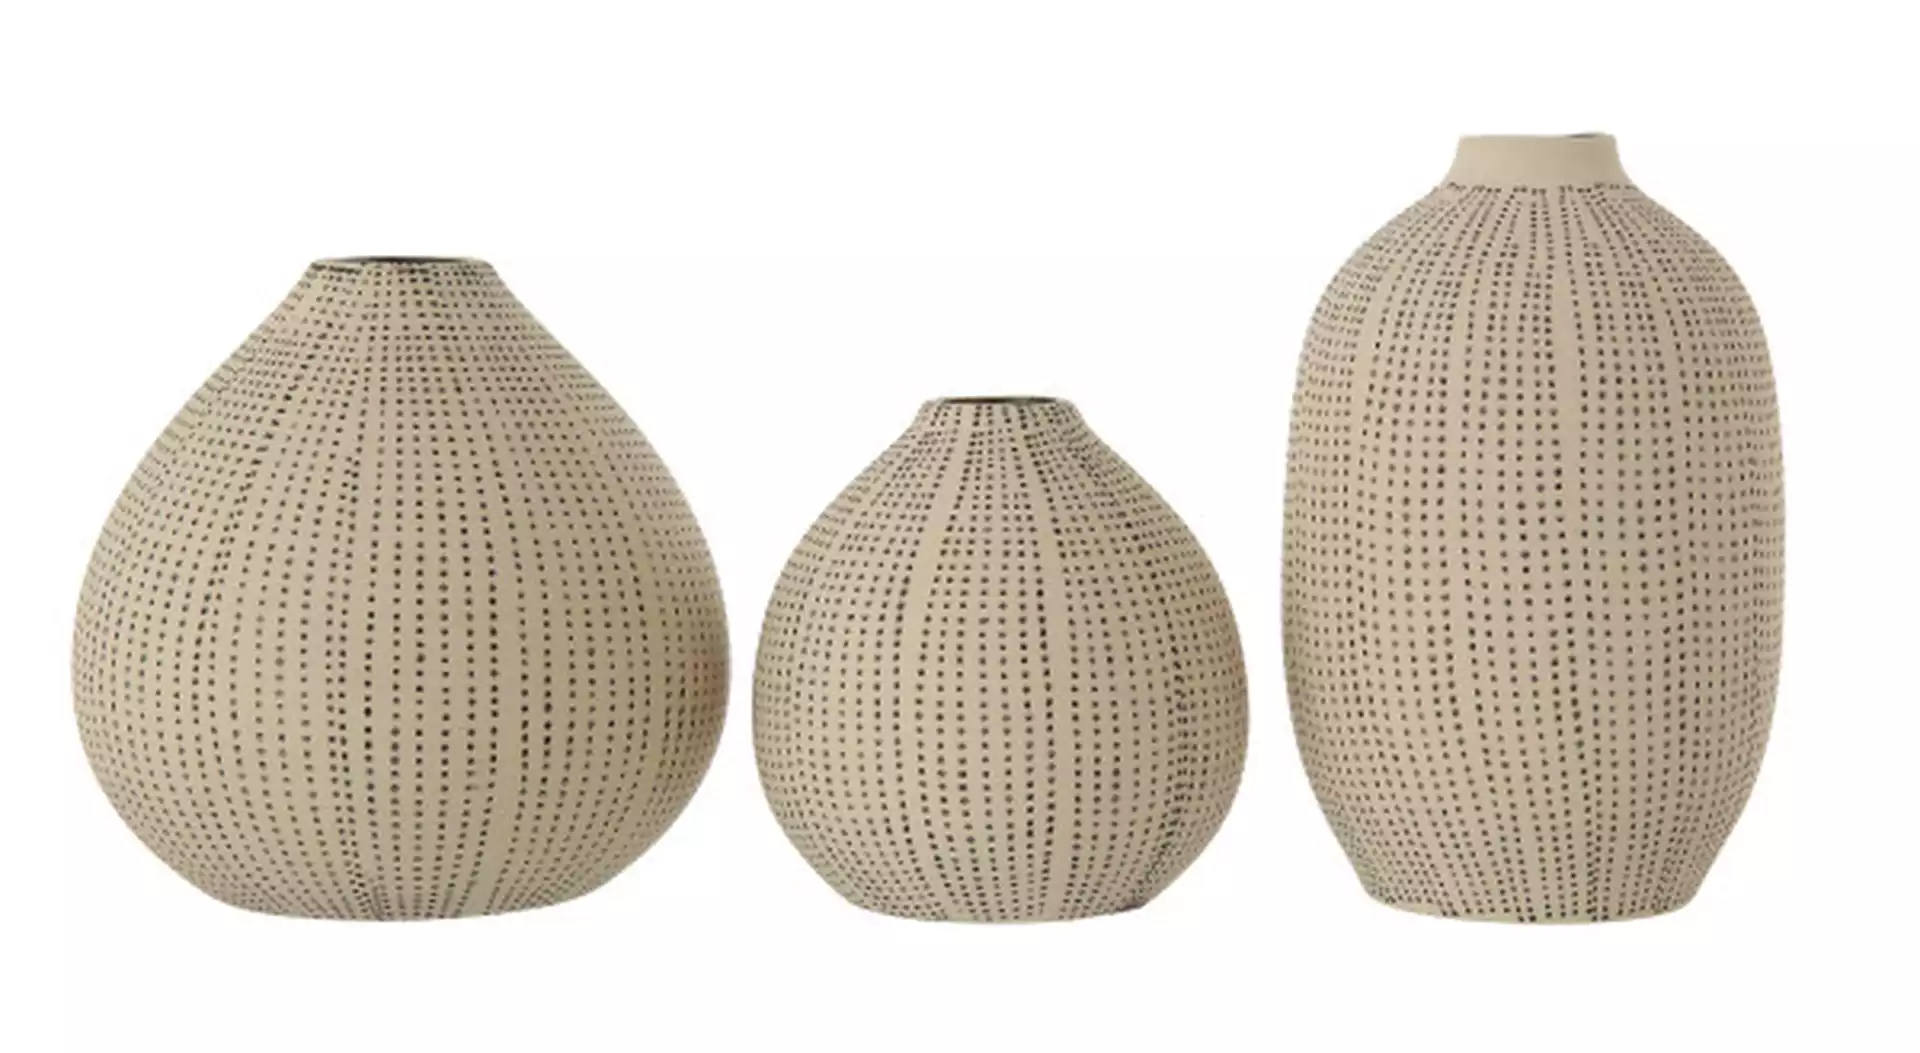 Black Polka Dots Stoneware Textured Vases, Set of 3